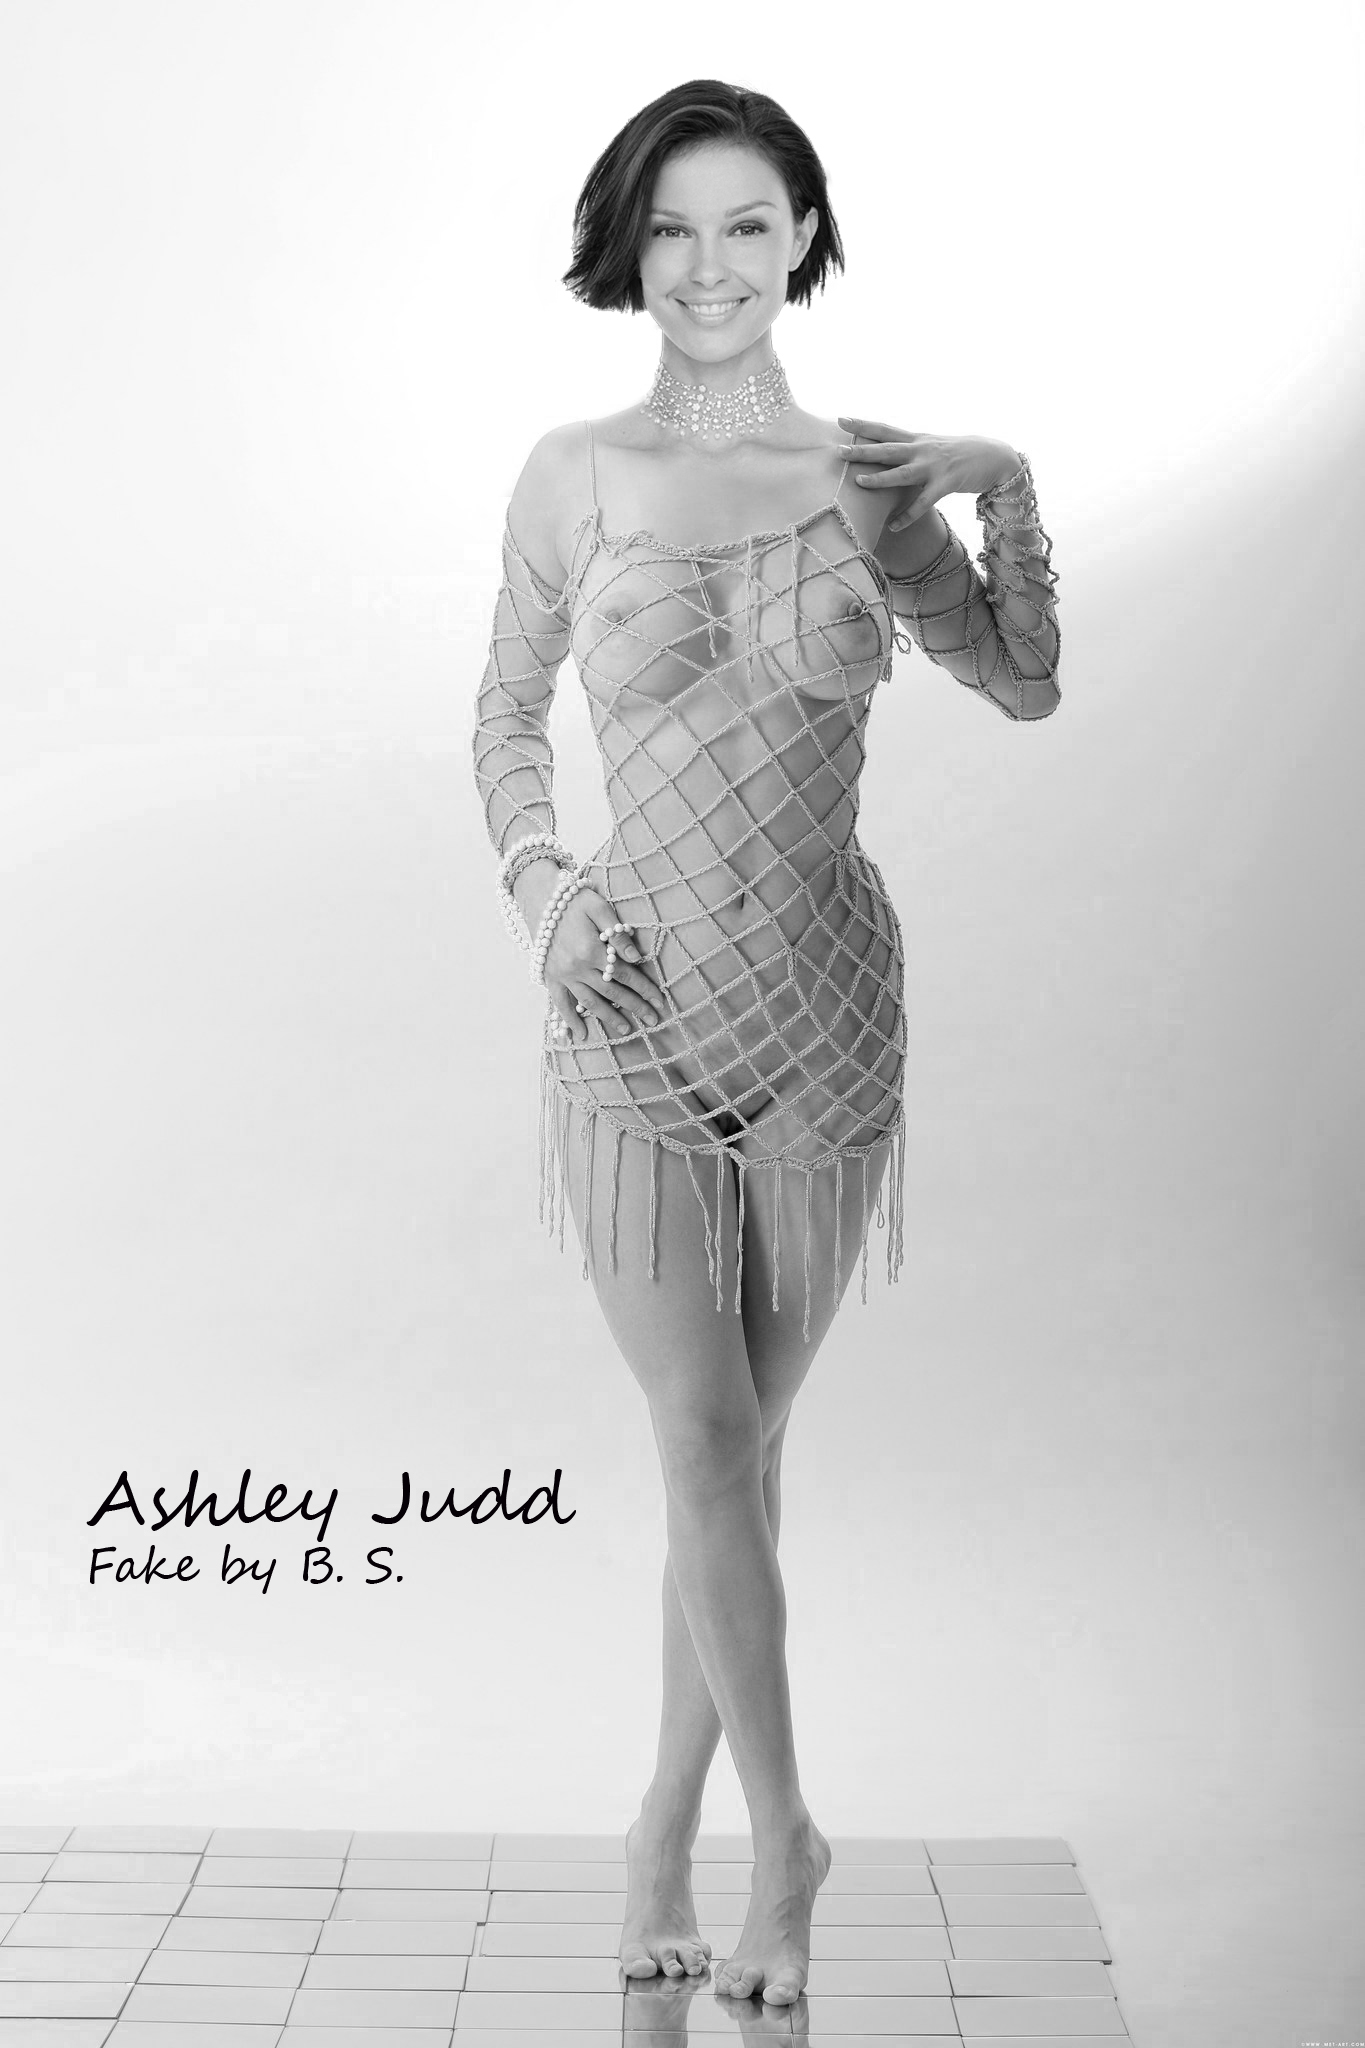 Ashley judd fan image